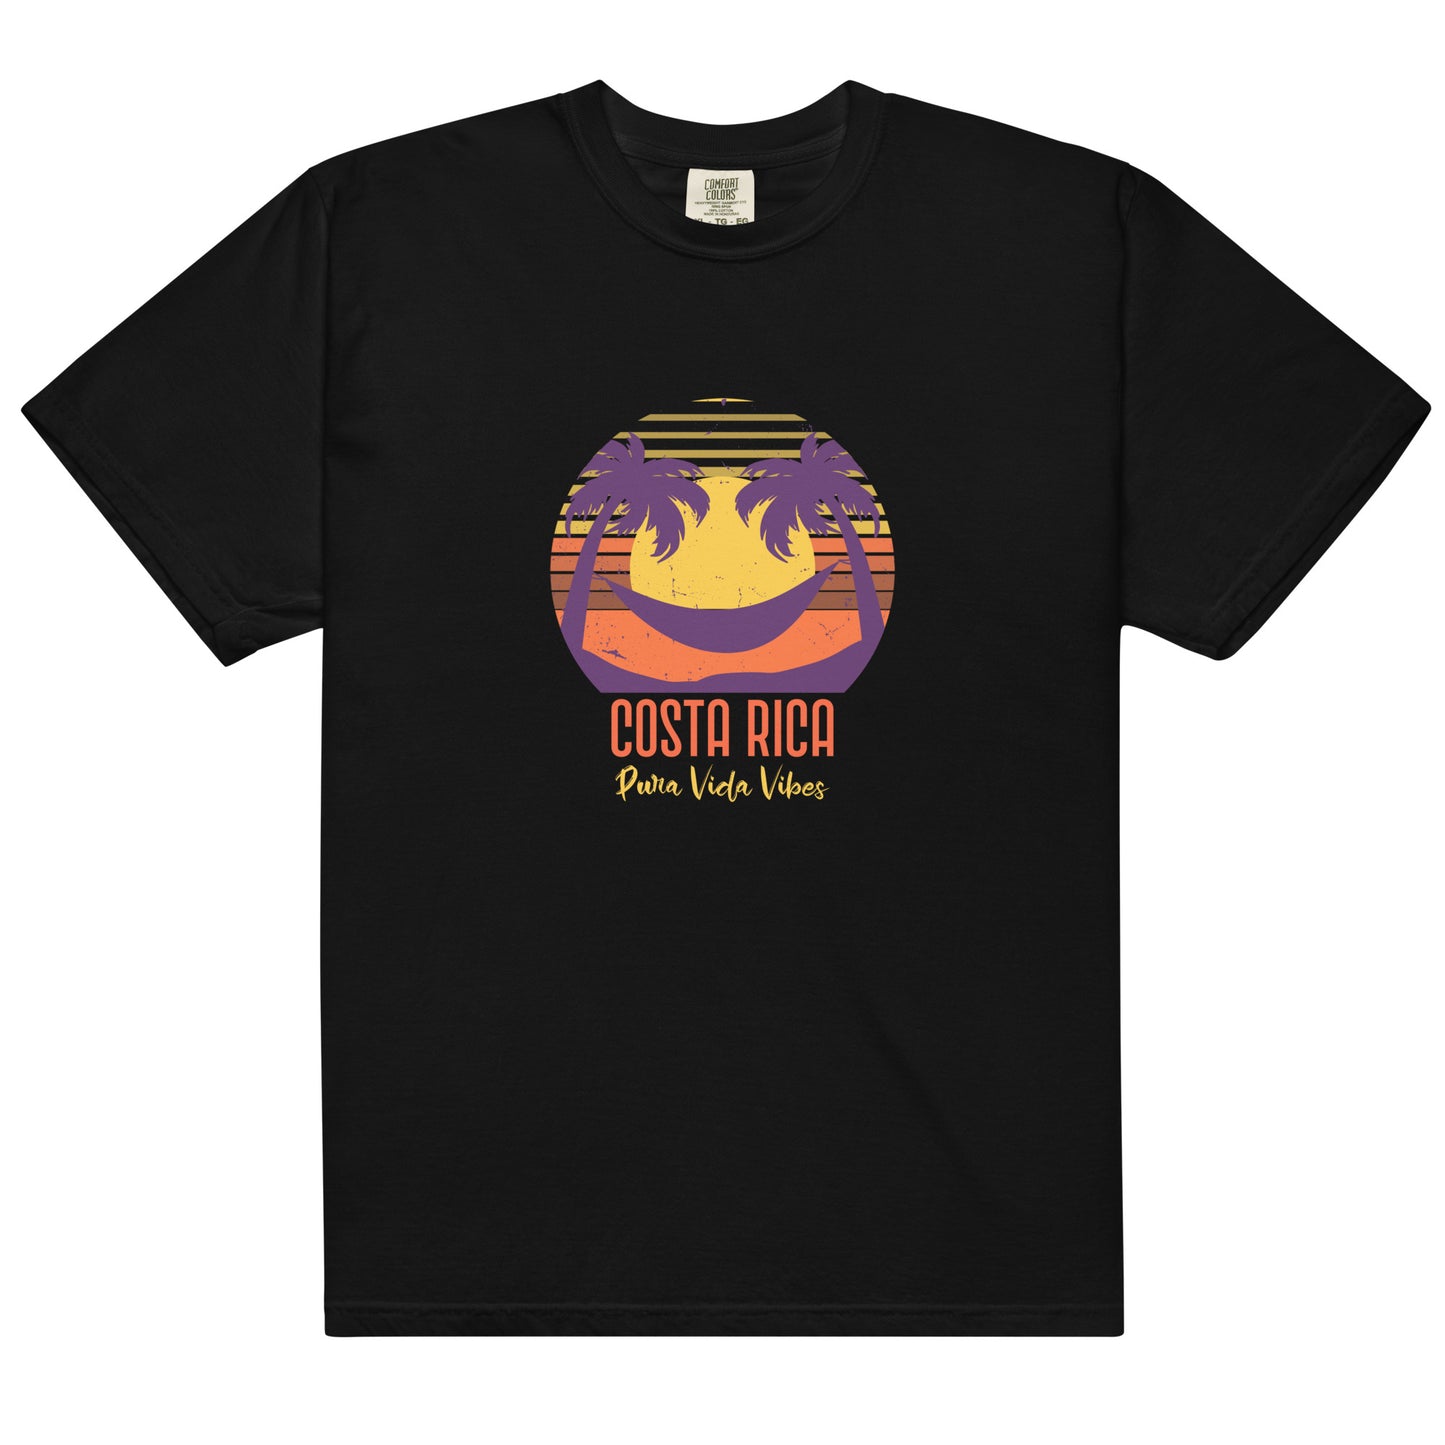 Costa Rica Pura Vida Vibes t-shirt - Unisex